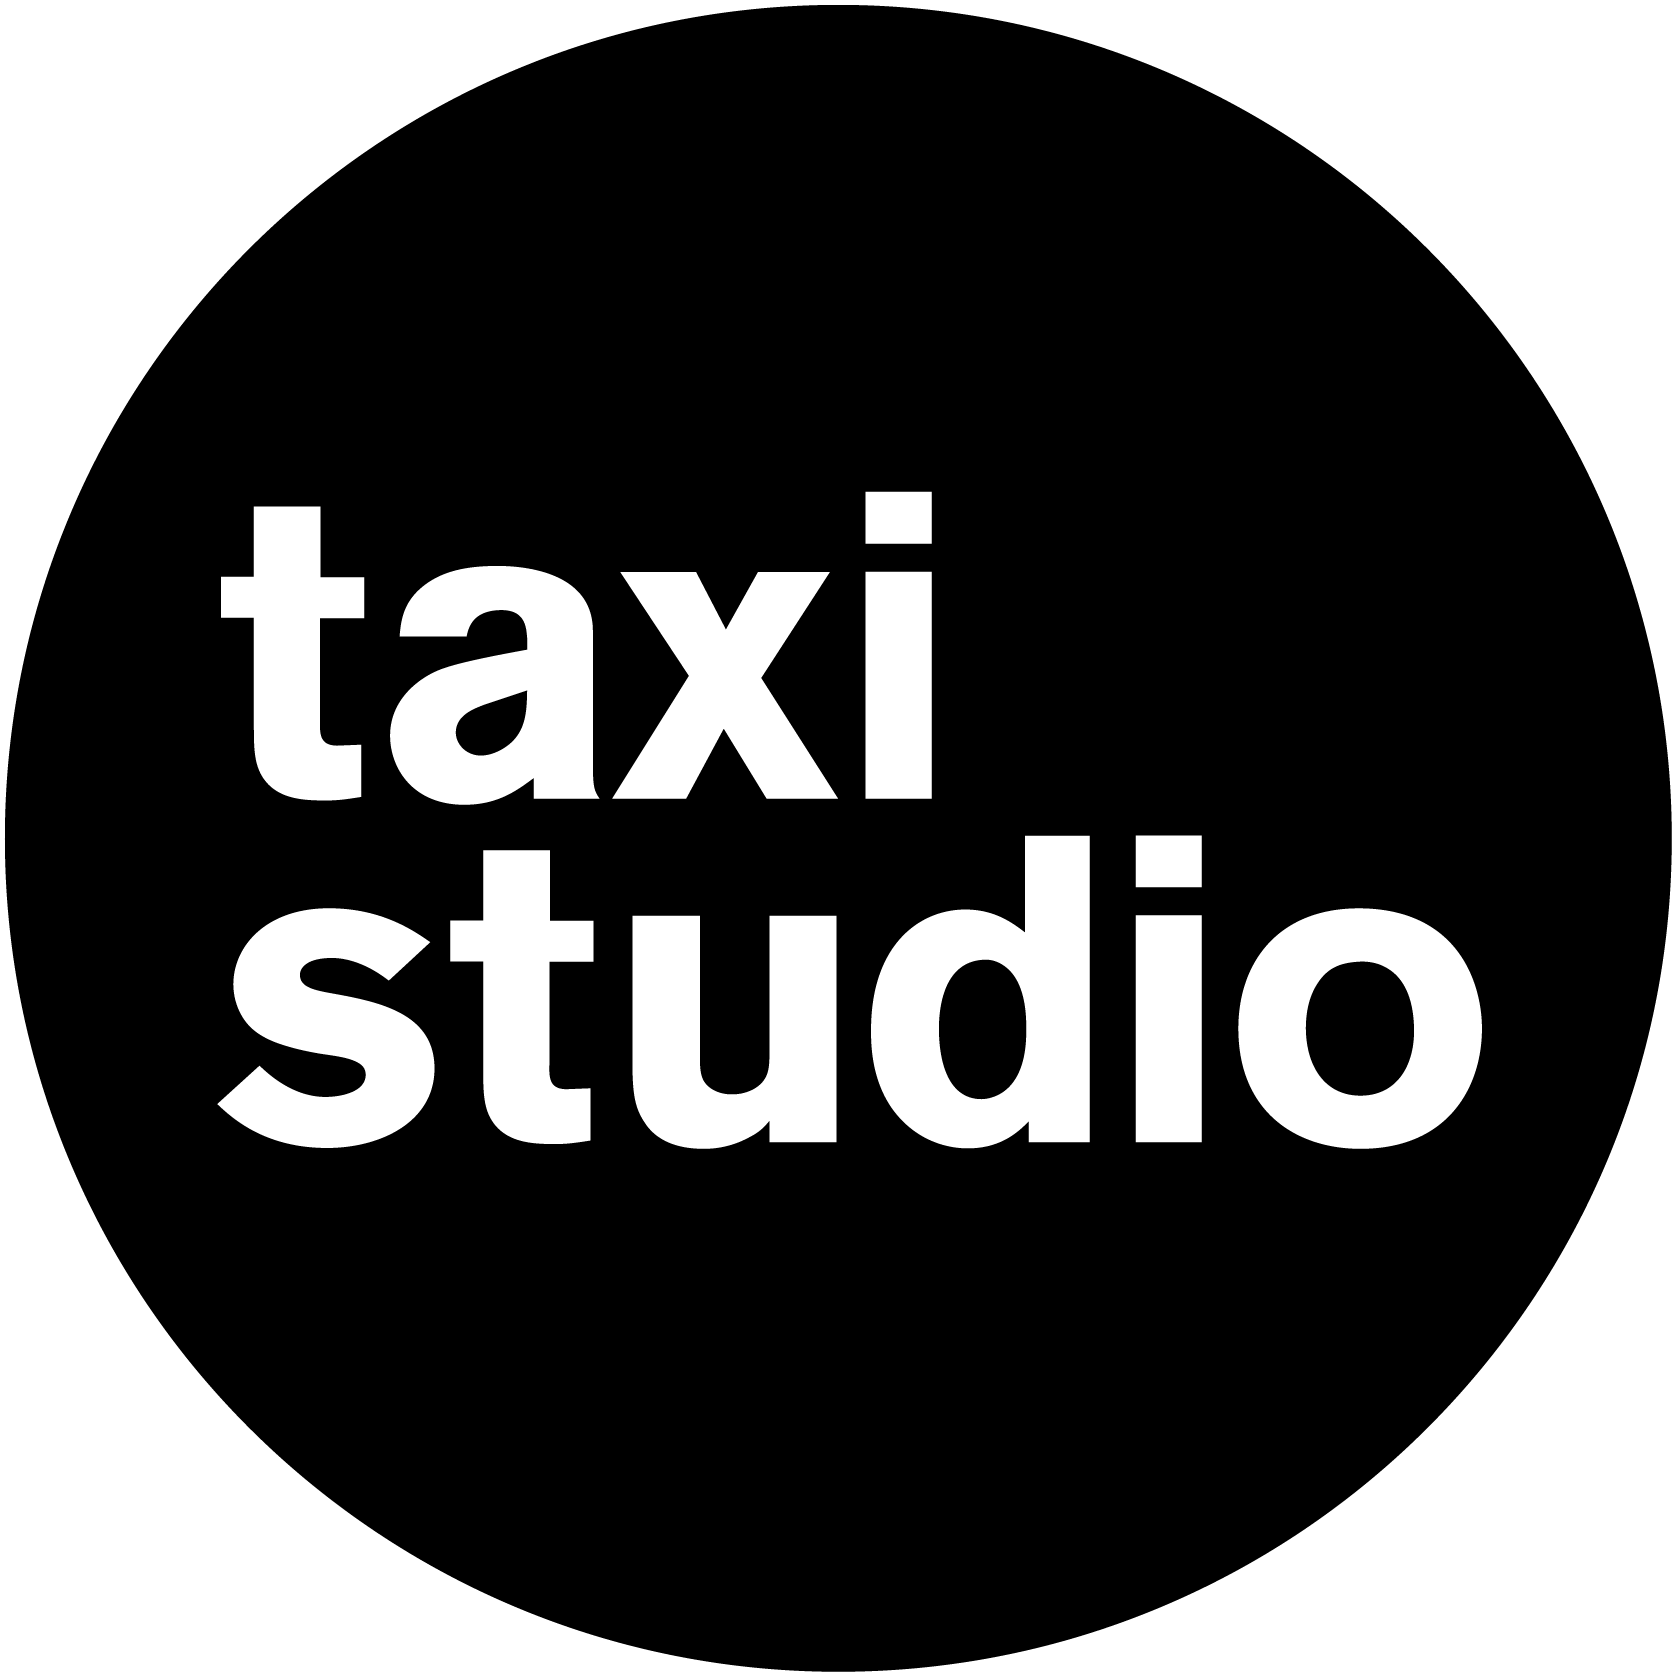 Taxi Studio company logo